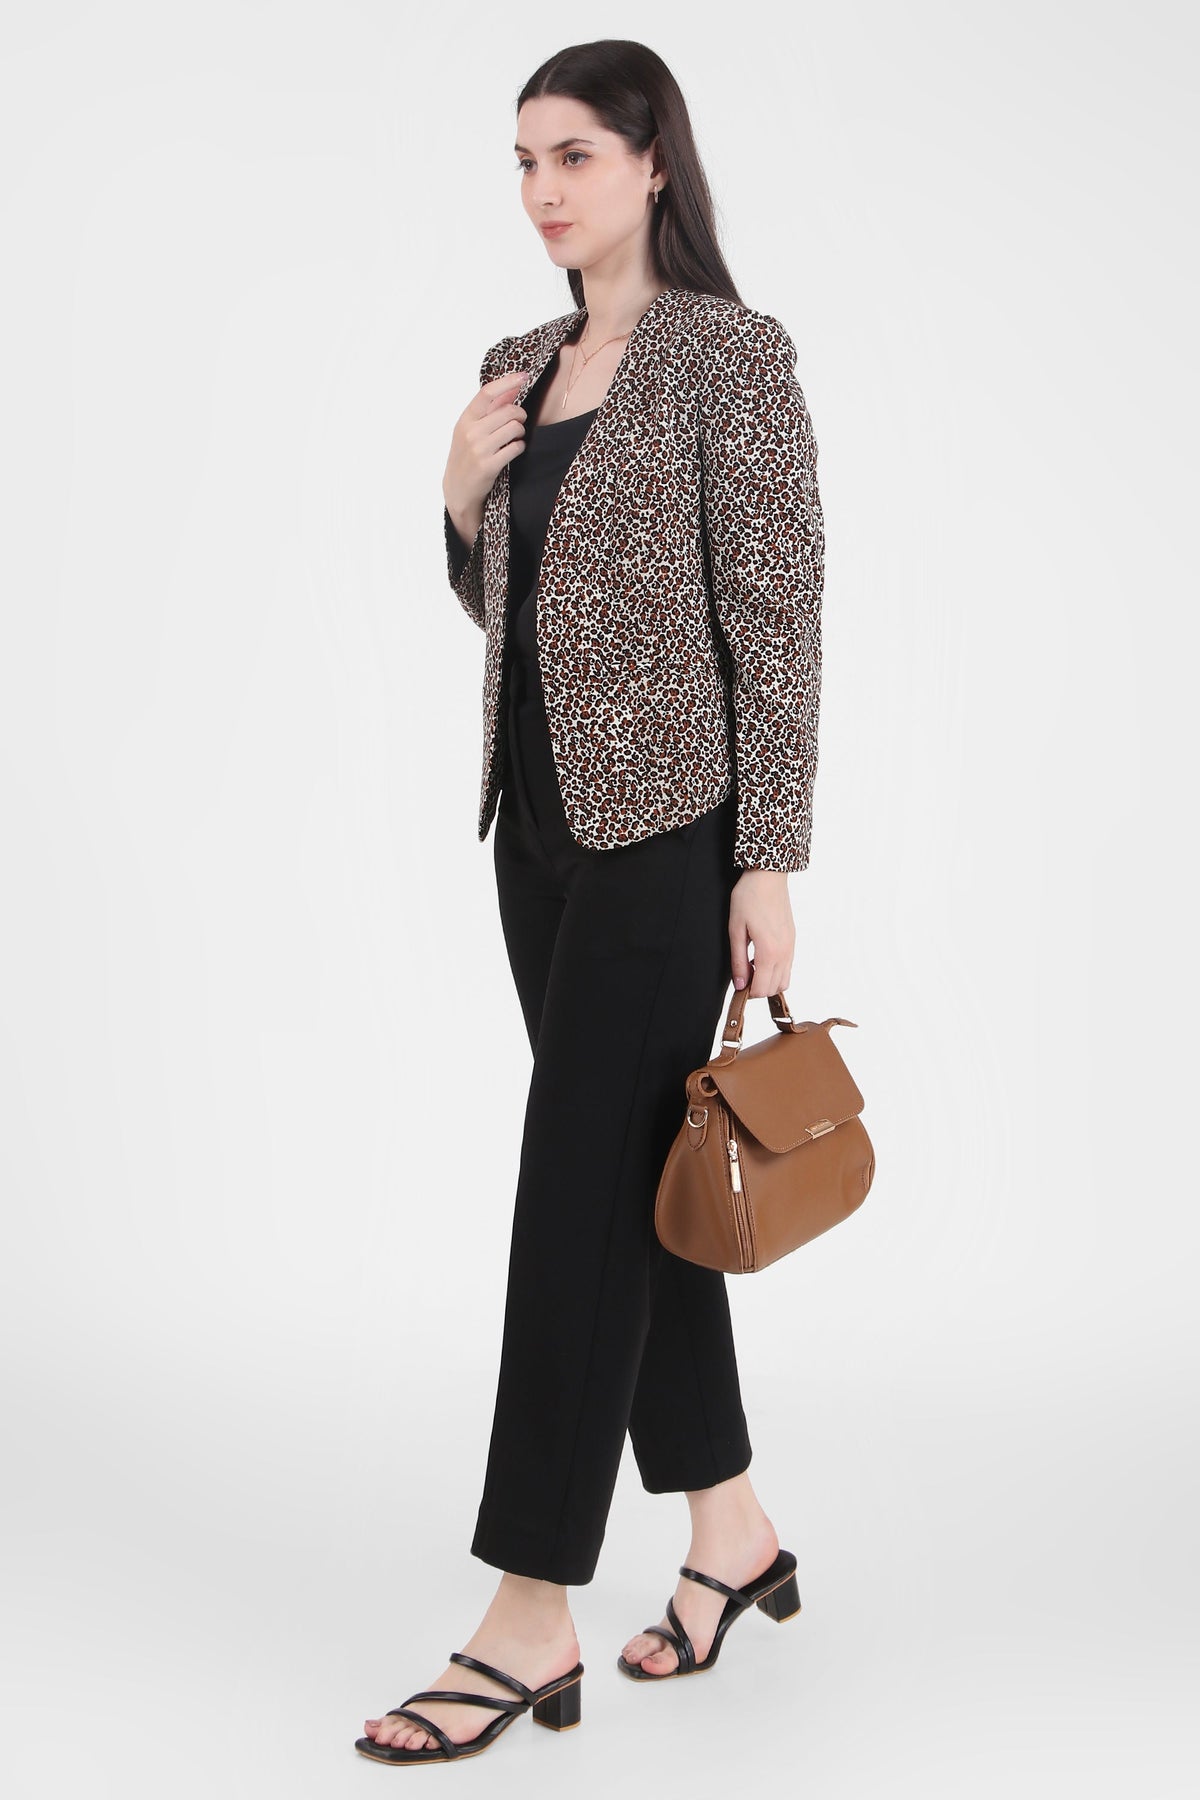 Leopard Puff Sleeves Front Open Style Blazer